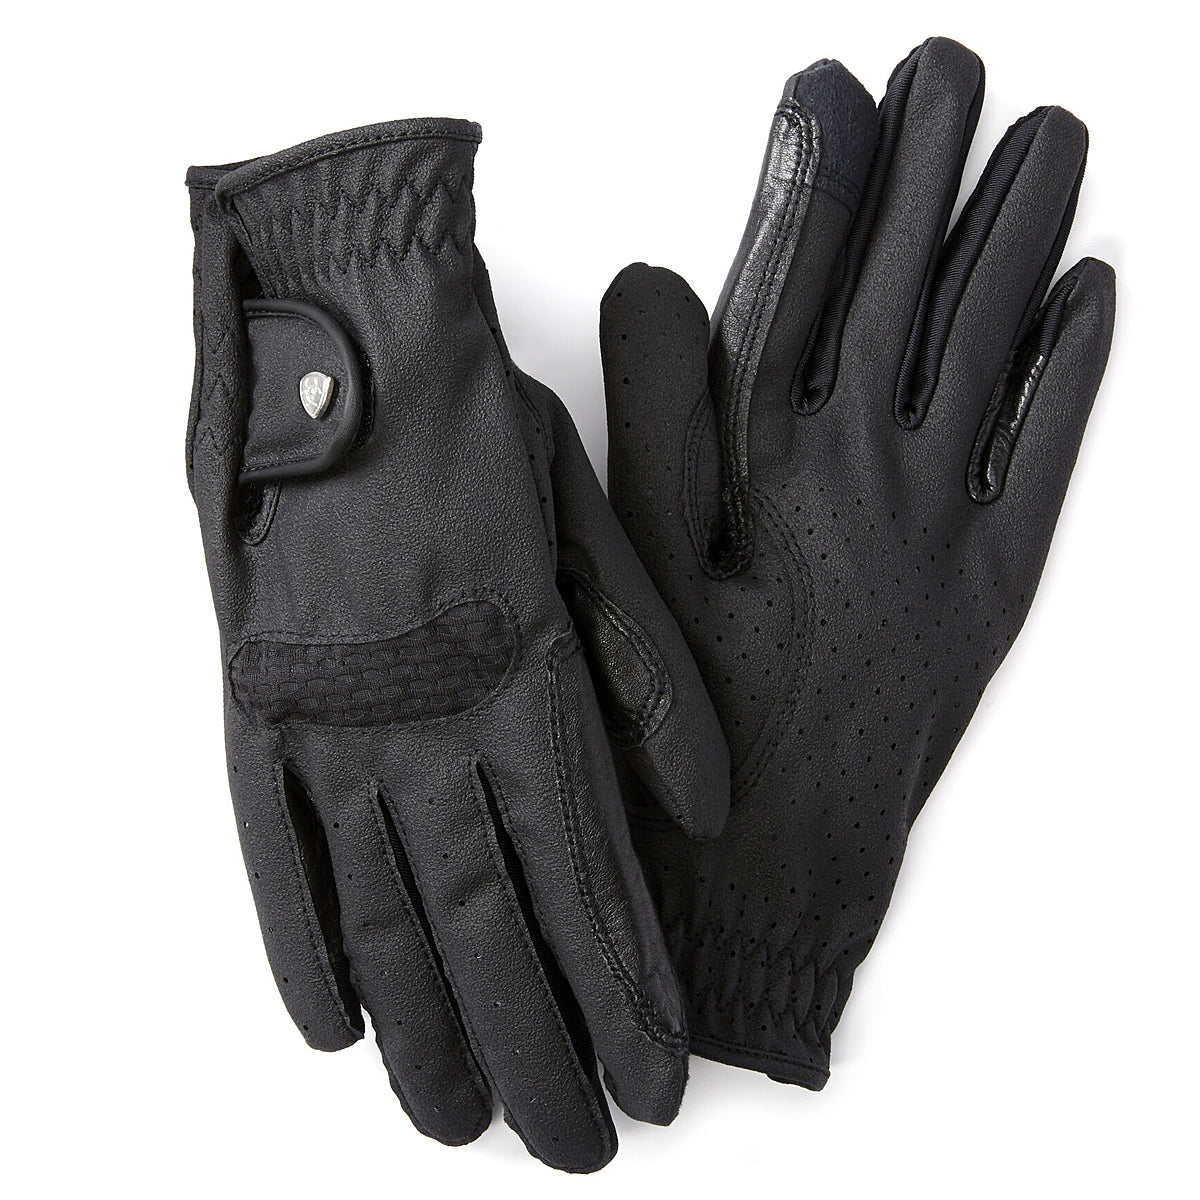 Extra Grip Gloves